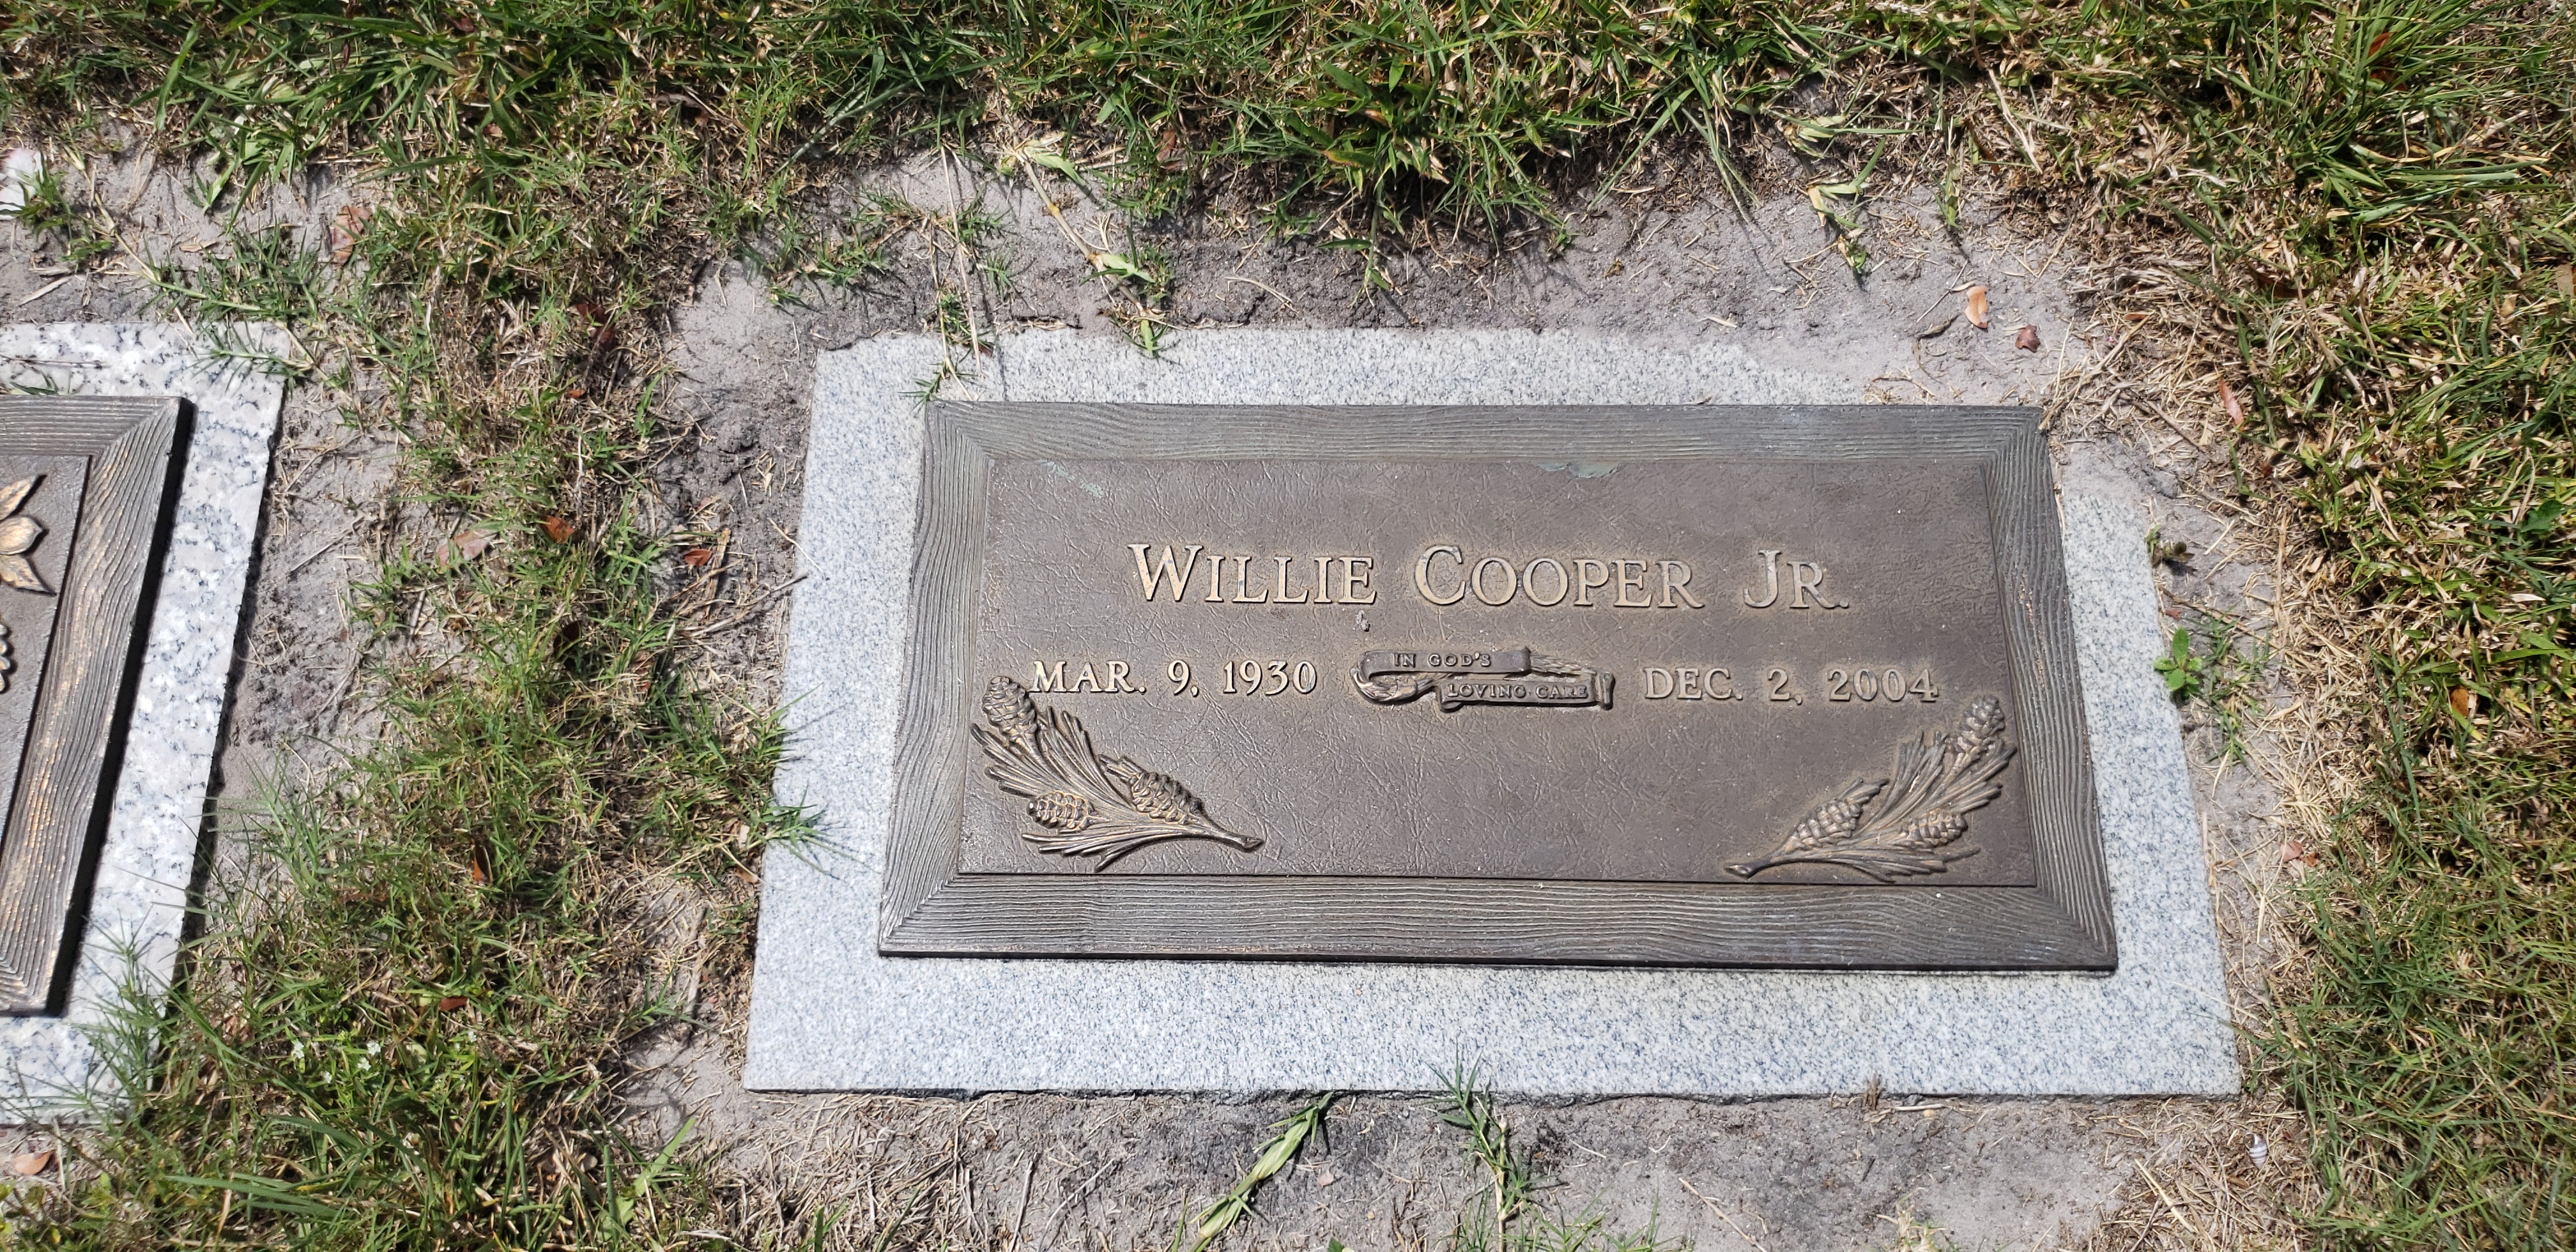 Willie Cooper, Jr